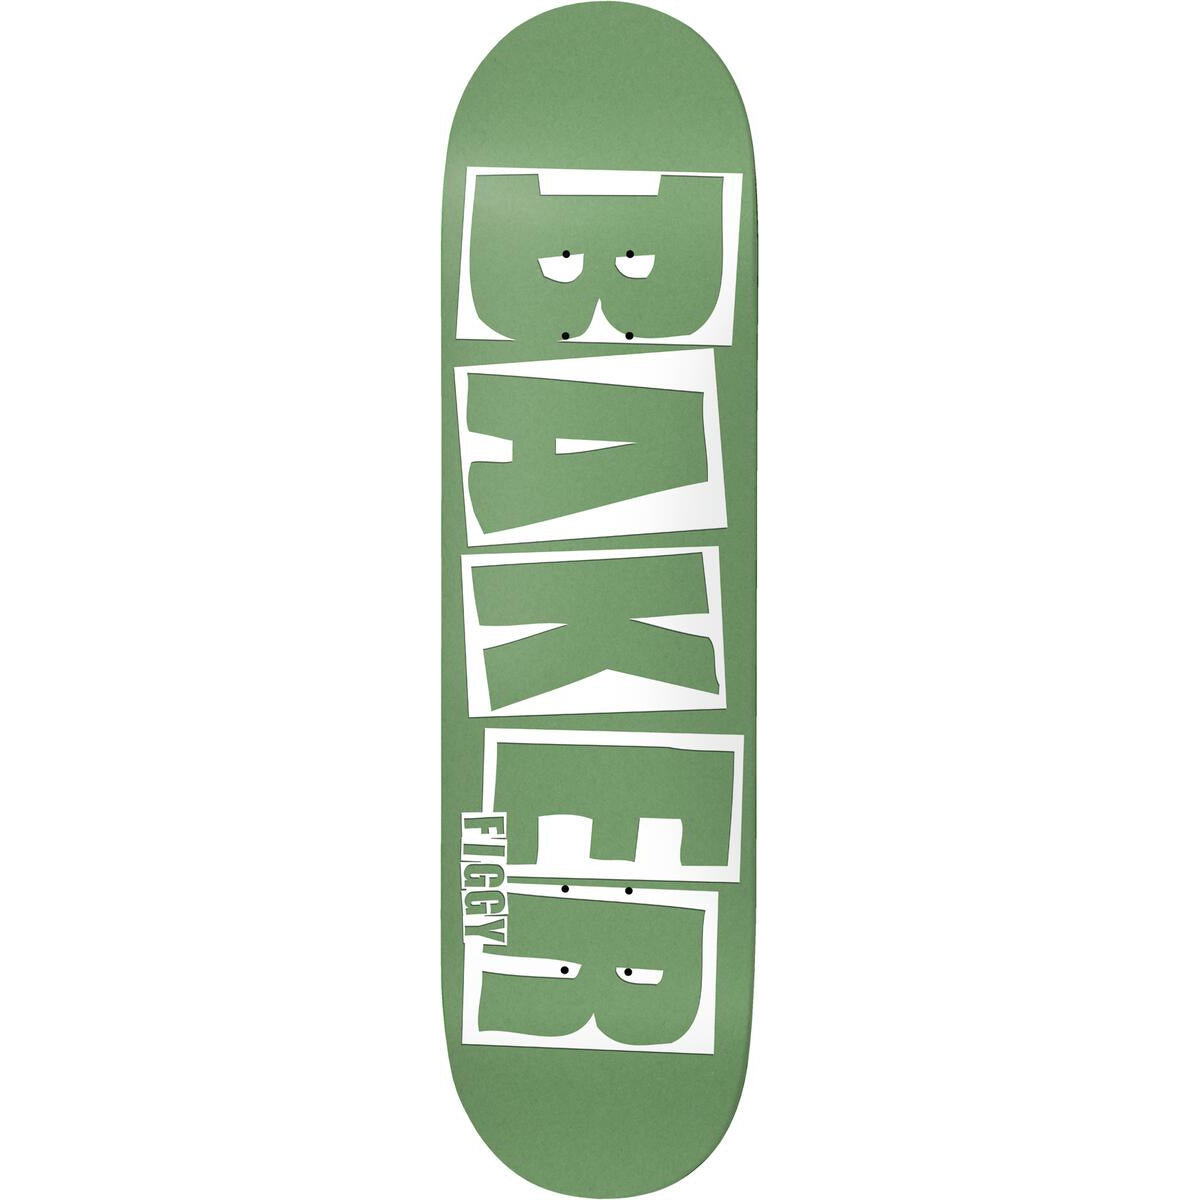 Figgy B2 Shape Brand Name Baker Skateboard Deck